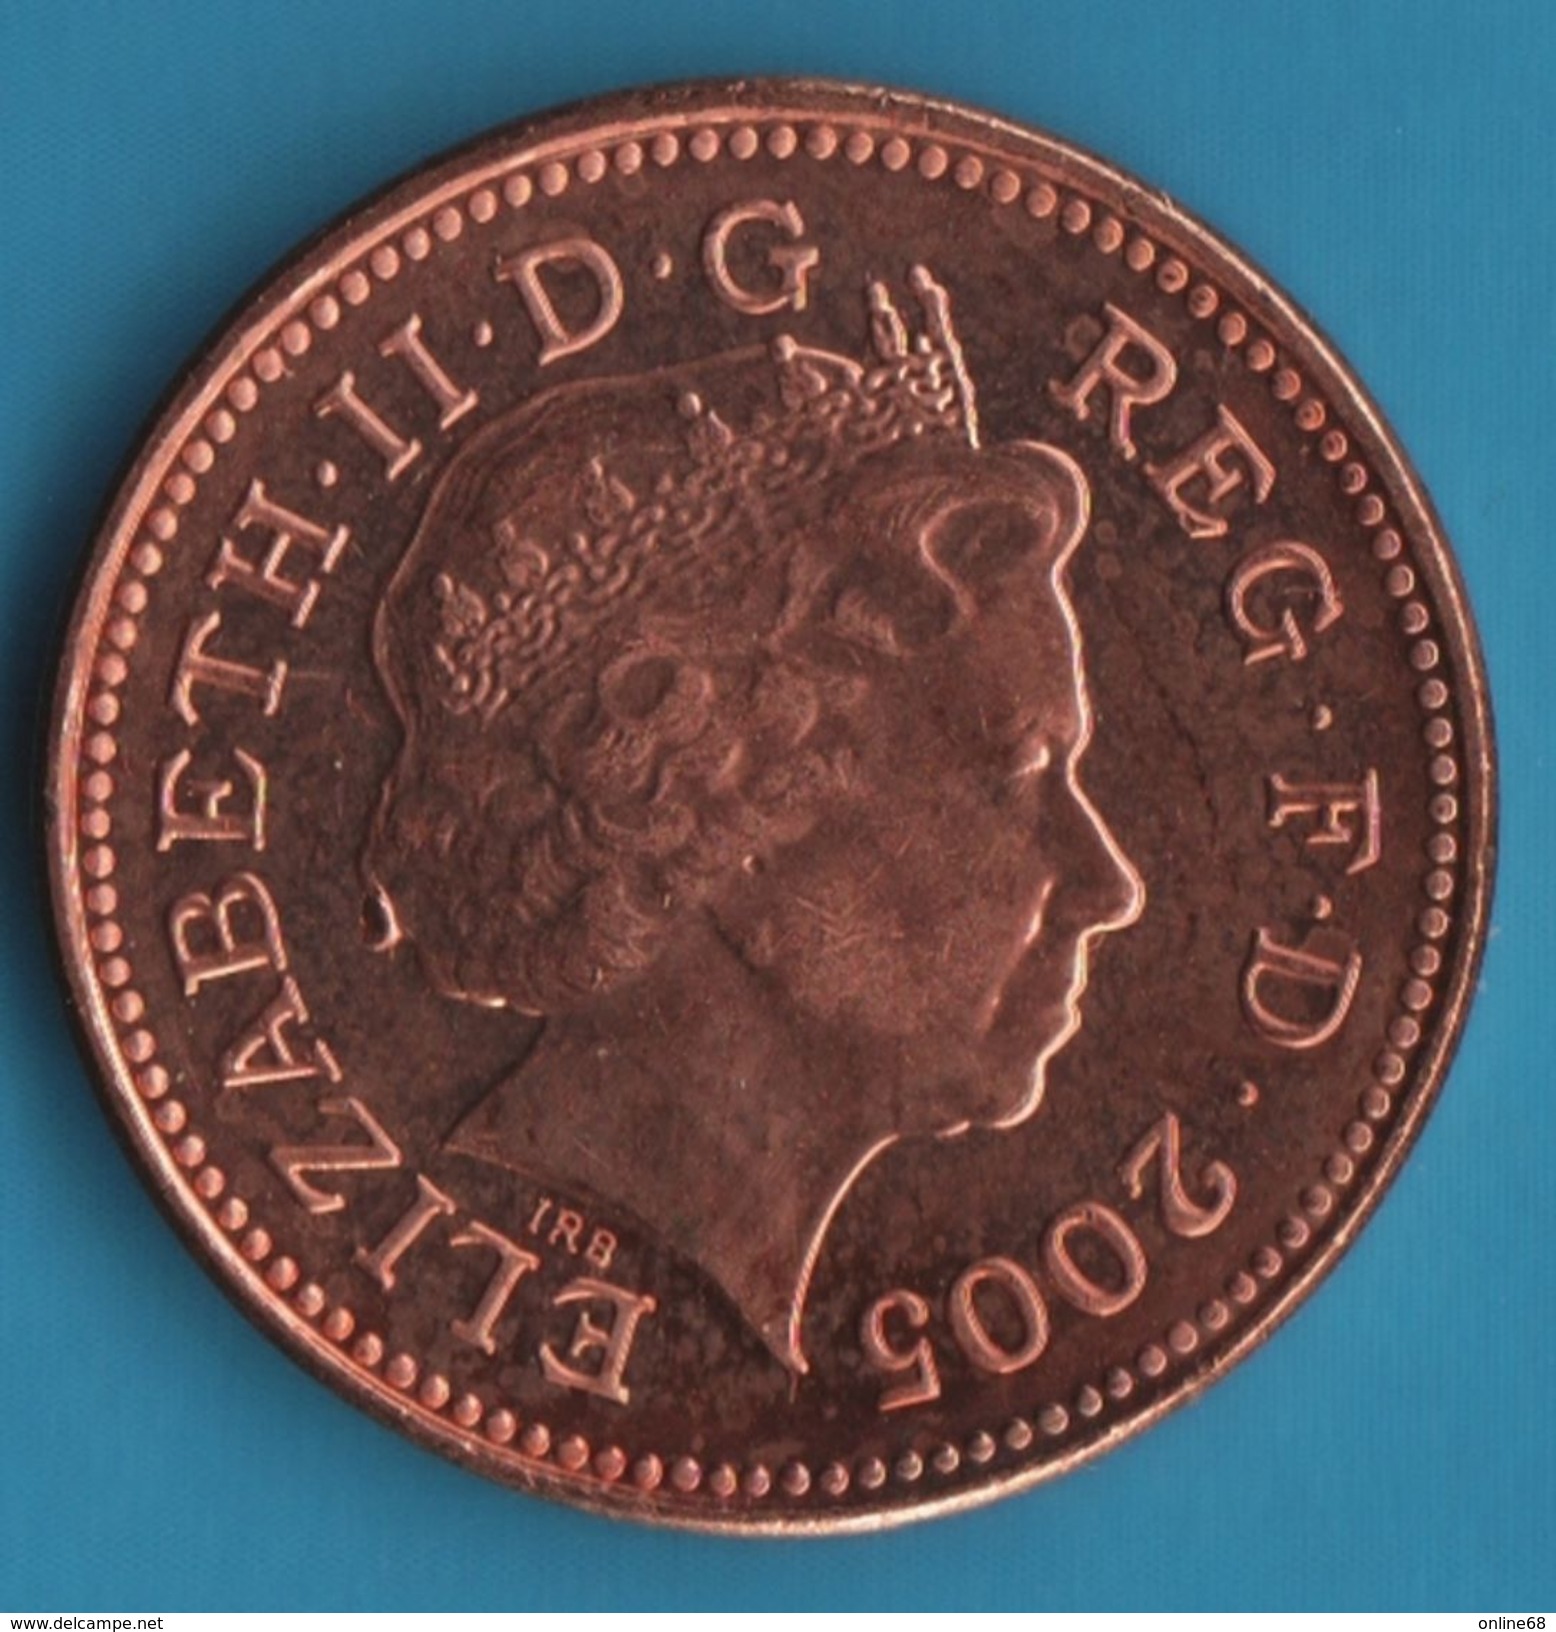 GB 1 PENNY 2005 QEII - 1 Penny & 1 New Penny